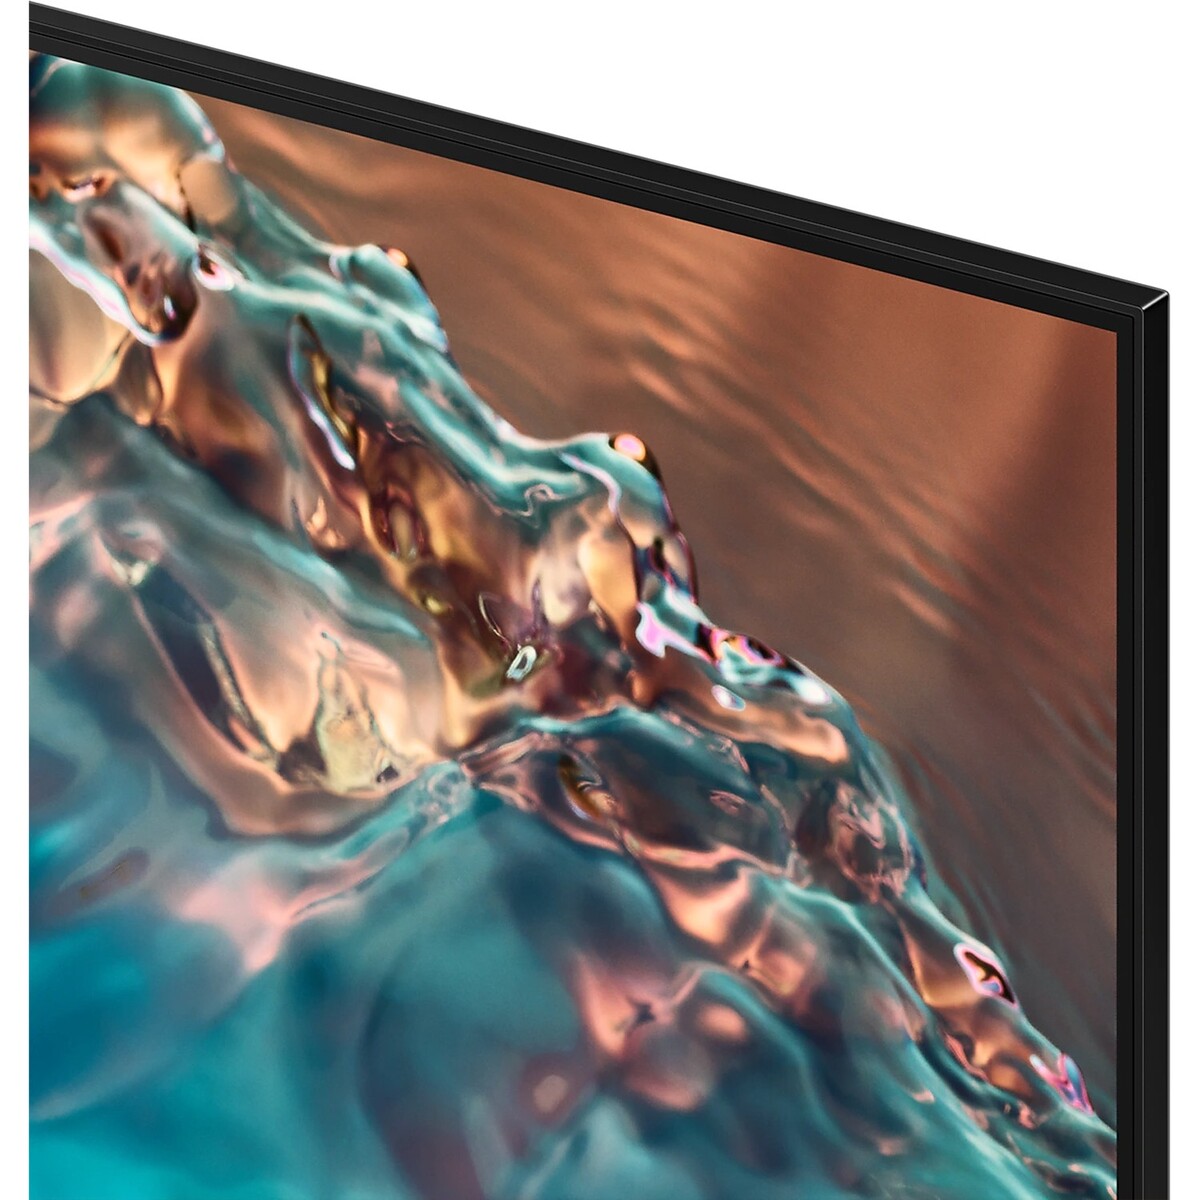 Samsung Crystal 4K UHD Smart LED TV UA43BU8000 43"